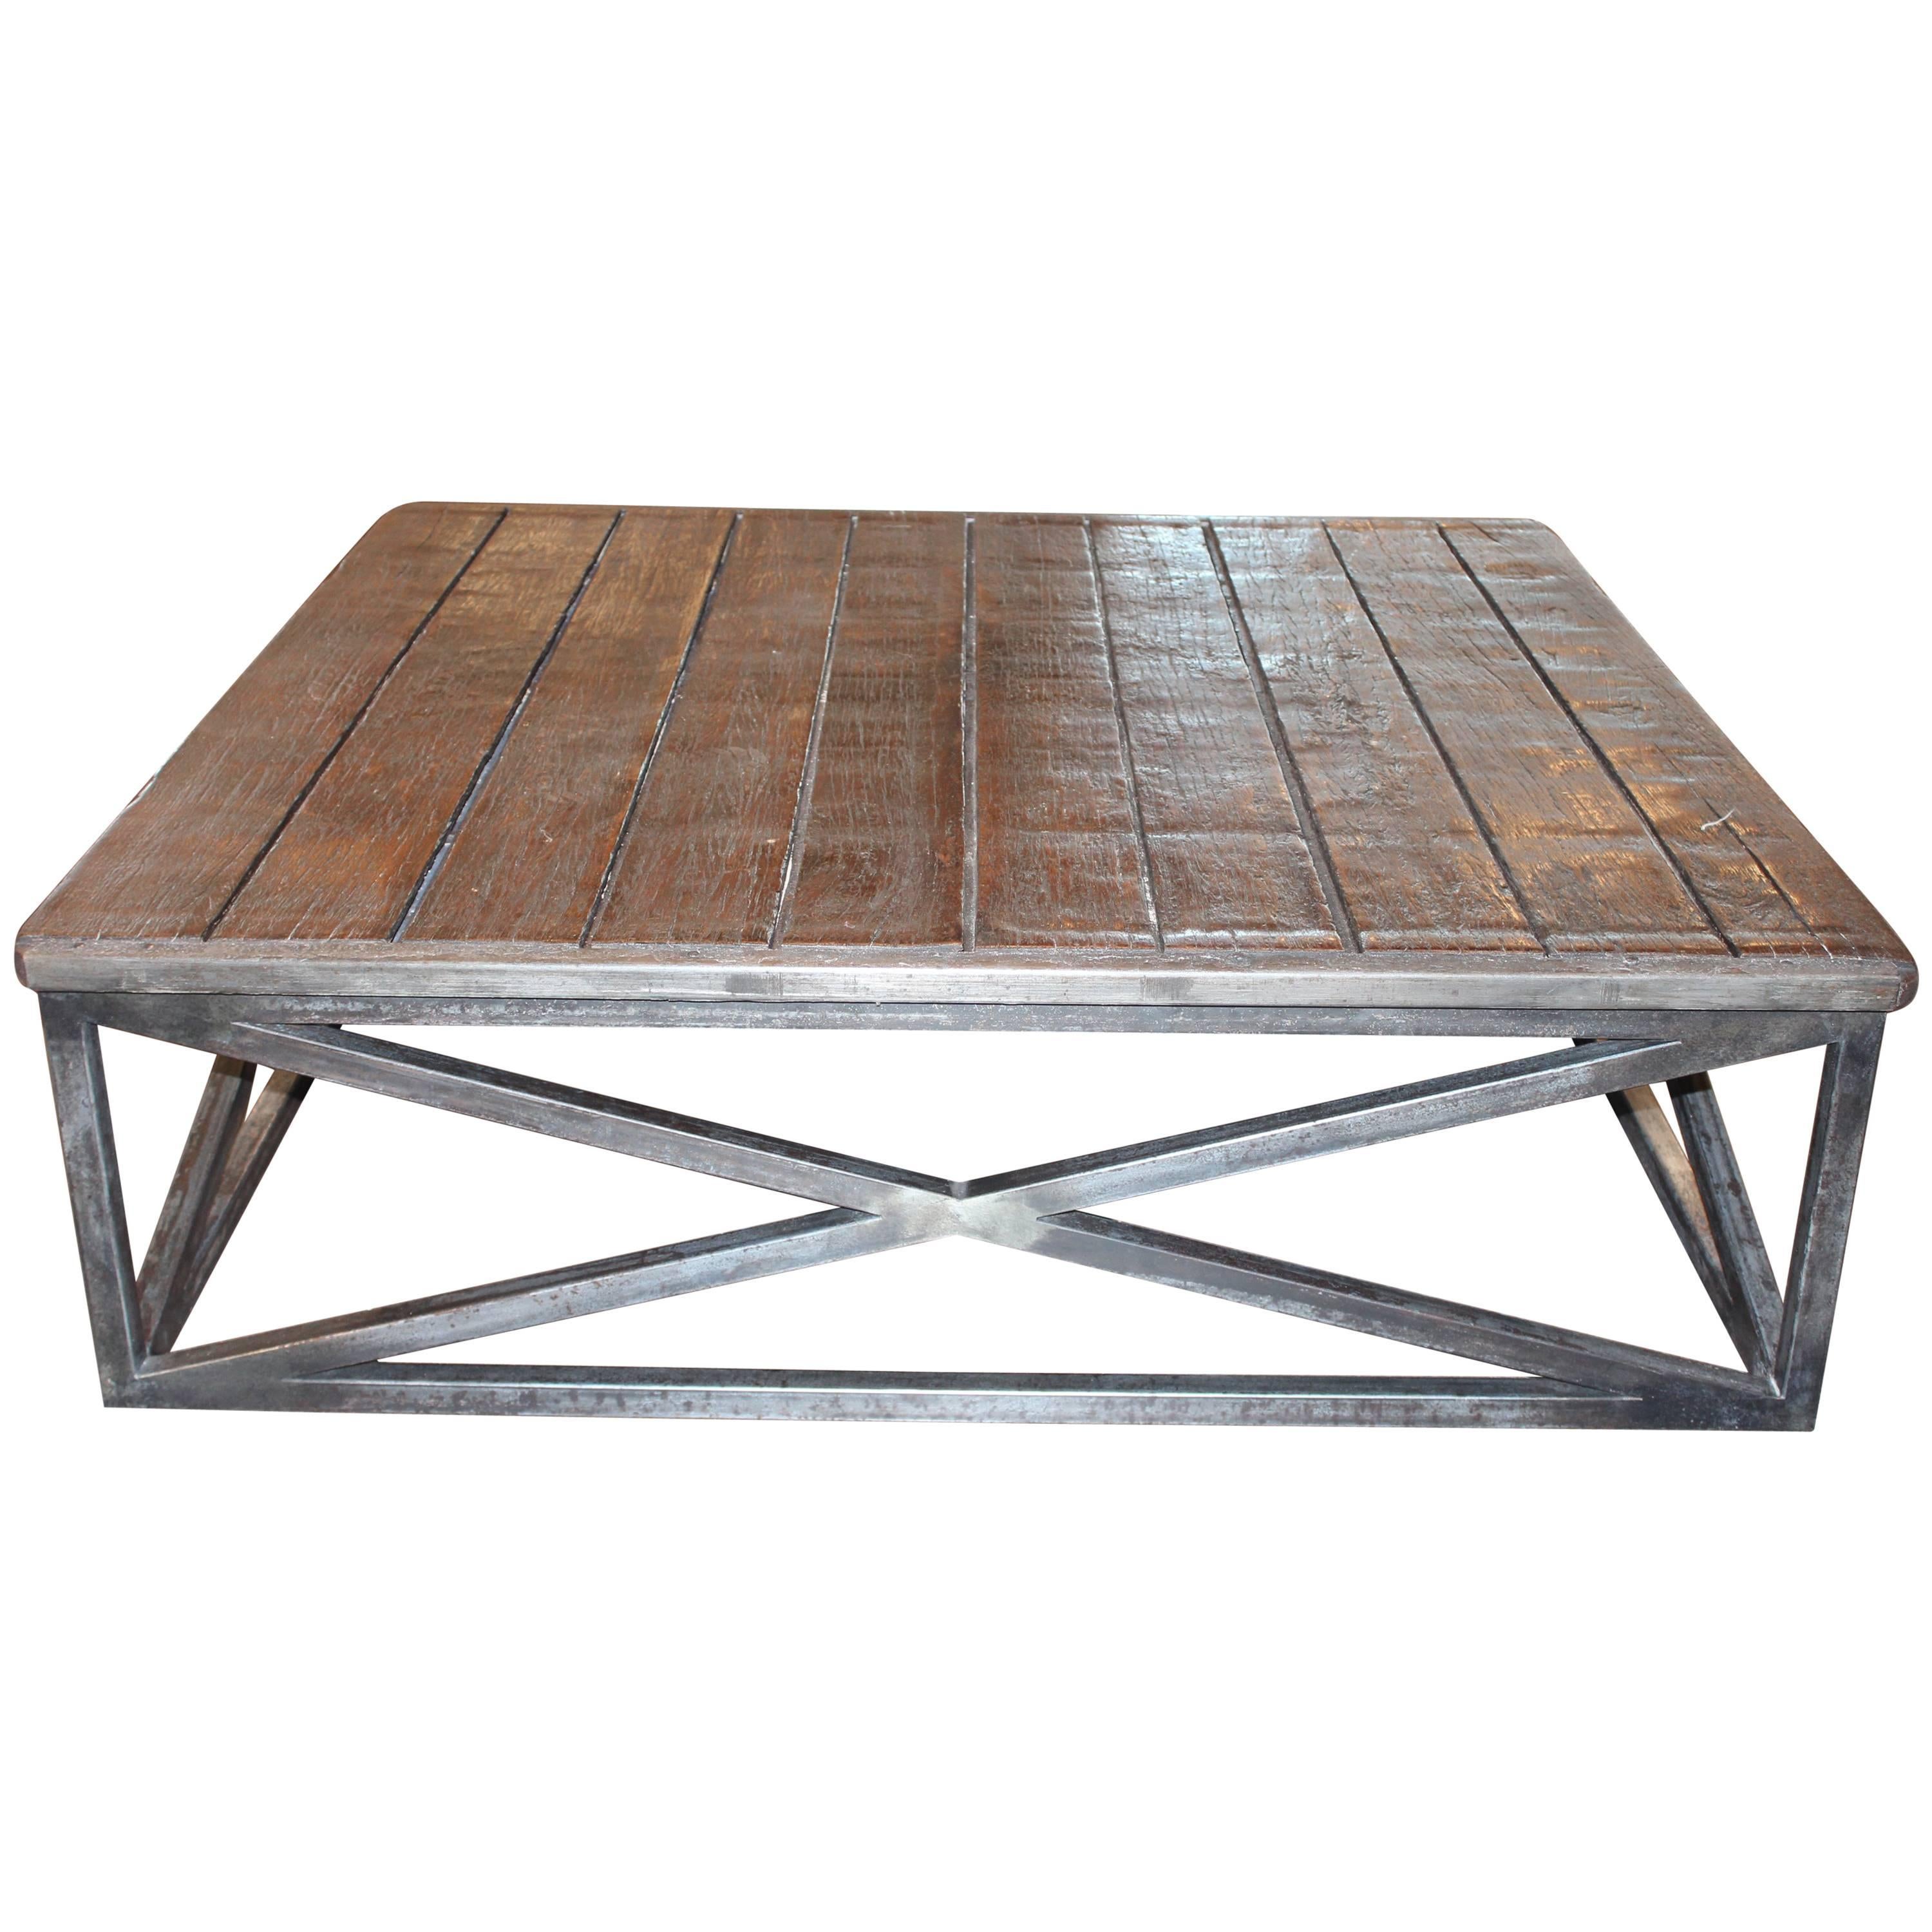 Vintage Brick Baking Pallet Coffee Table with Metal "X" Base